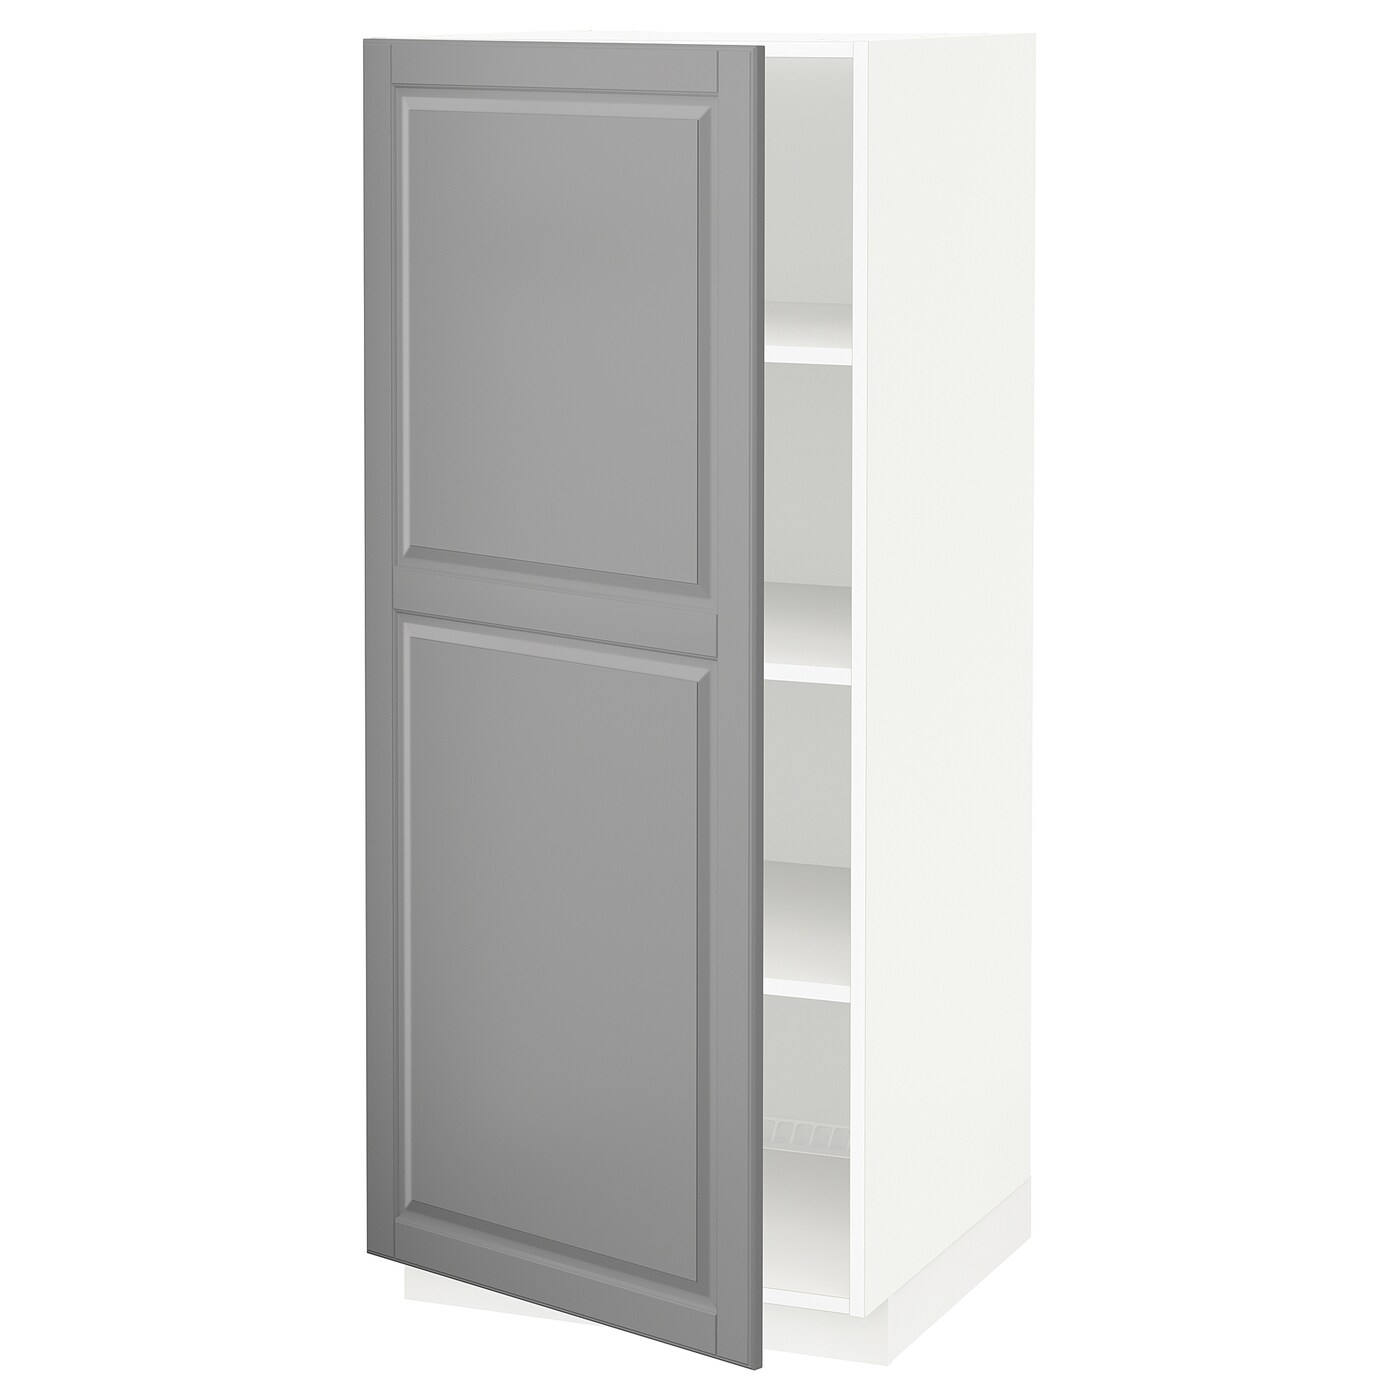 Высокий кухонный шкаф с полками - IKEA METOD/МЕТОД ИКЕА, 140х60х60 см, белый/серый